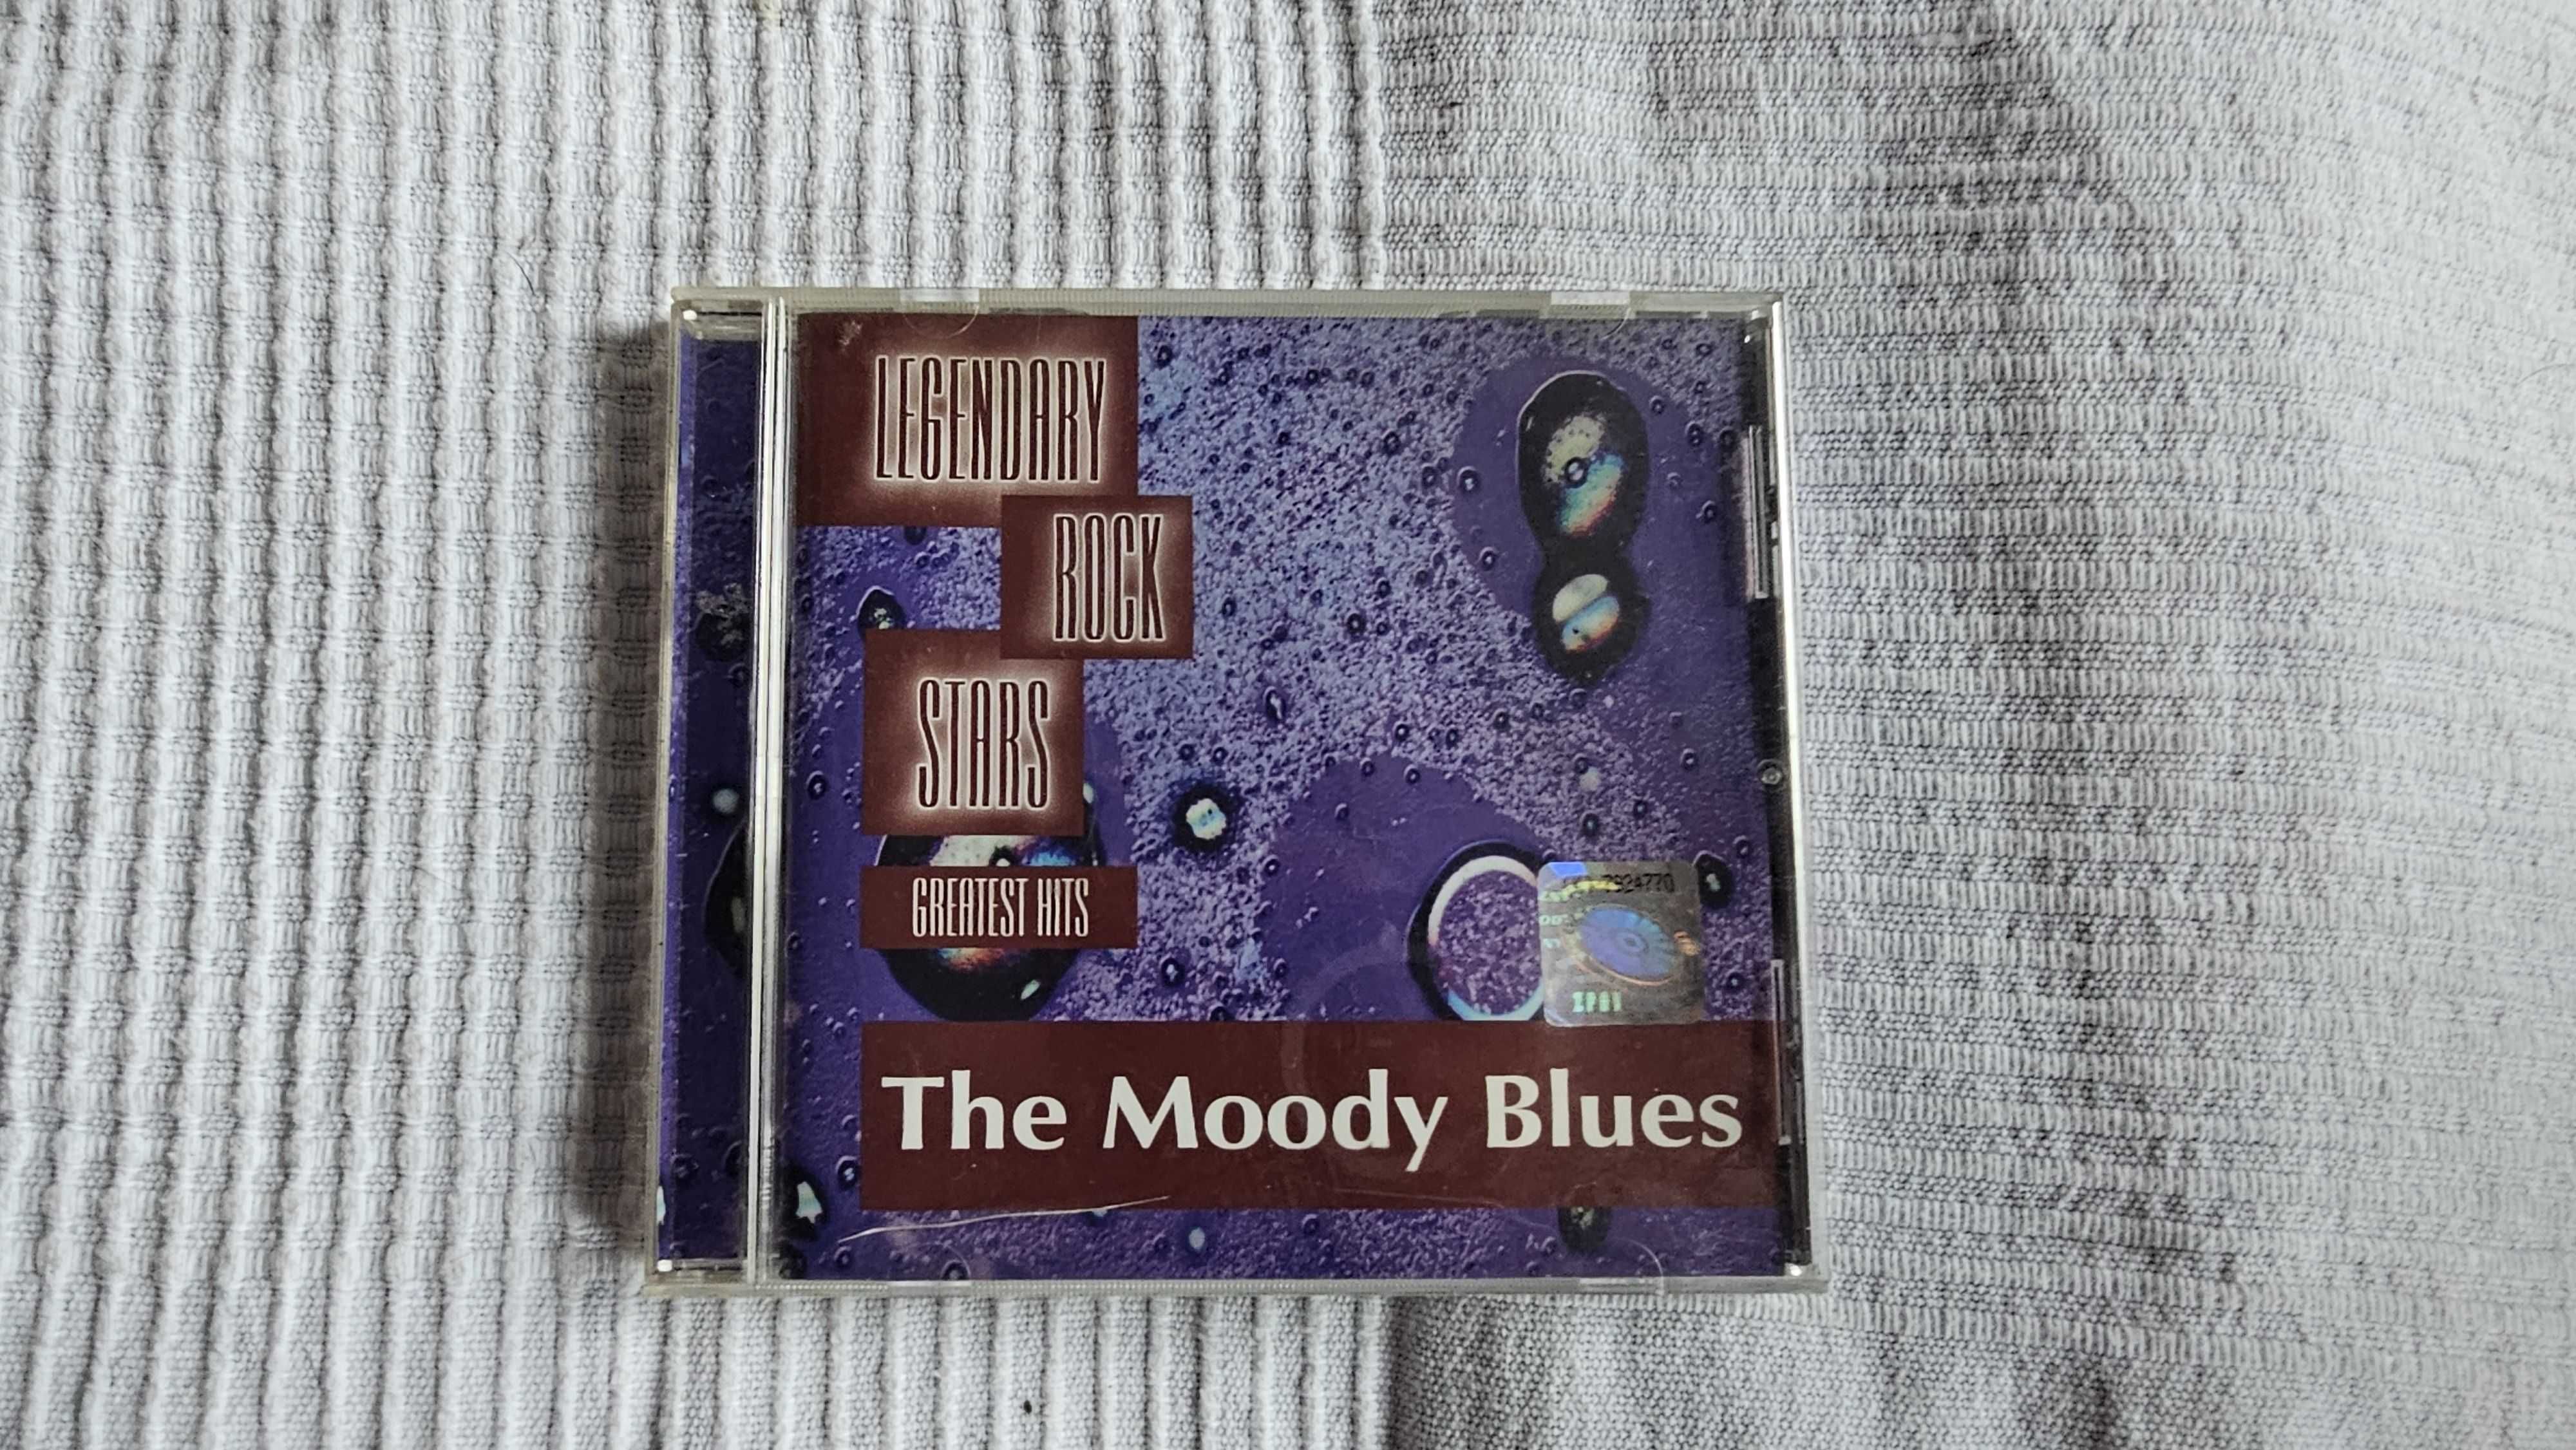 CD The Moody Blues - Legendary Rock Stars Greatest Hits